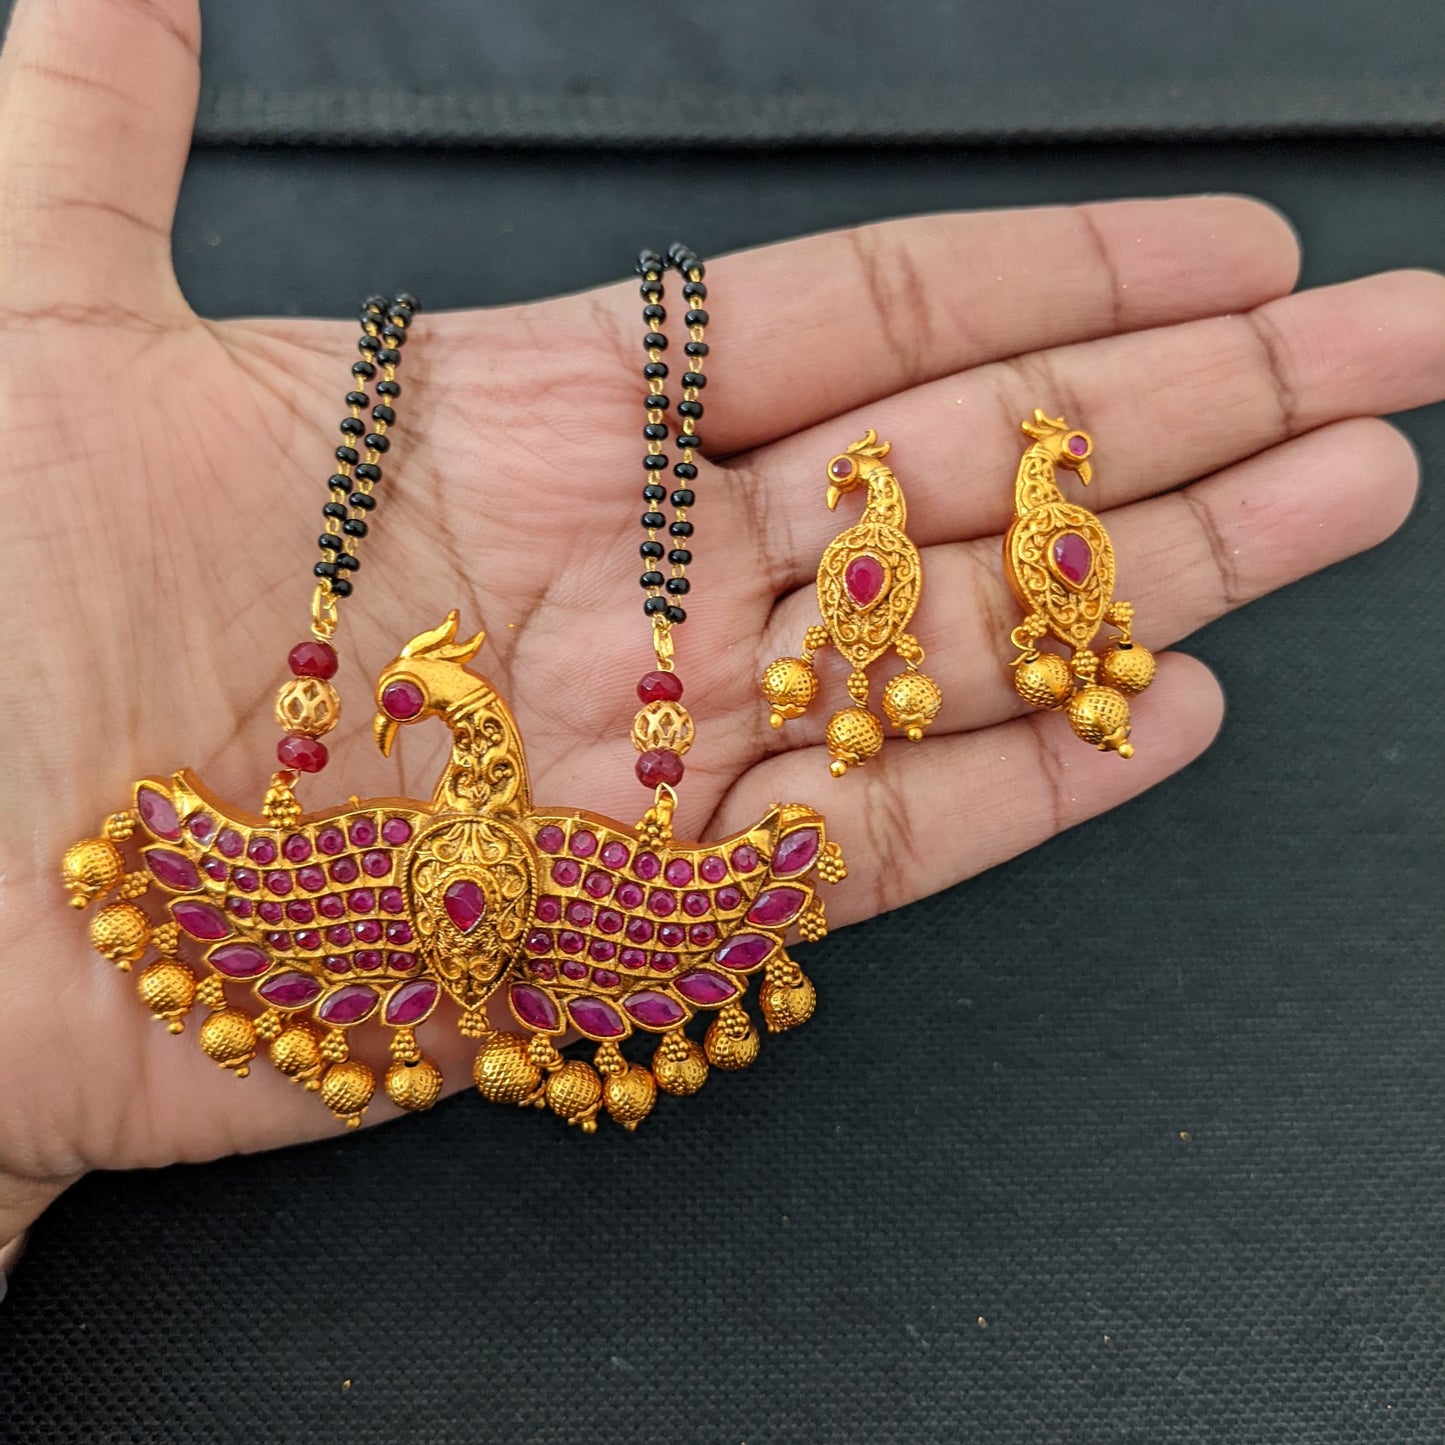 Mangalsutra - Ruby Kemp Pendant and Earrings set - Dual strand - Peacock design